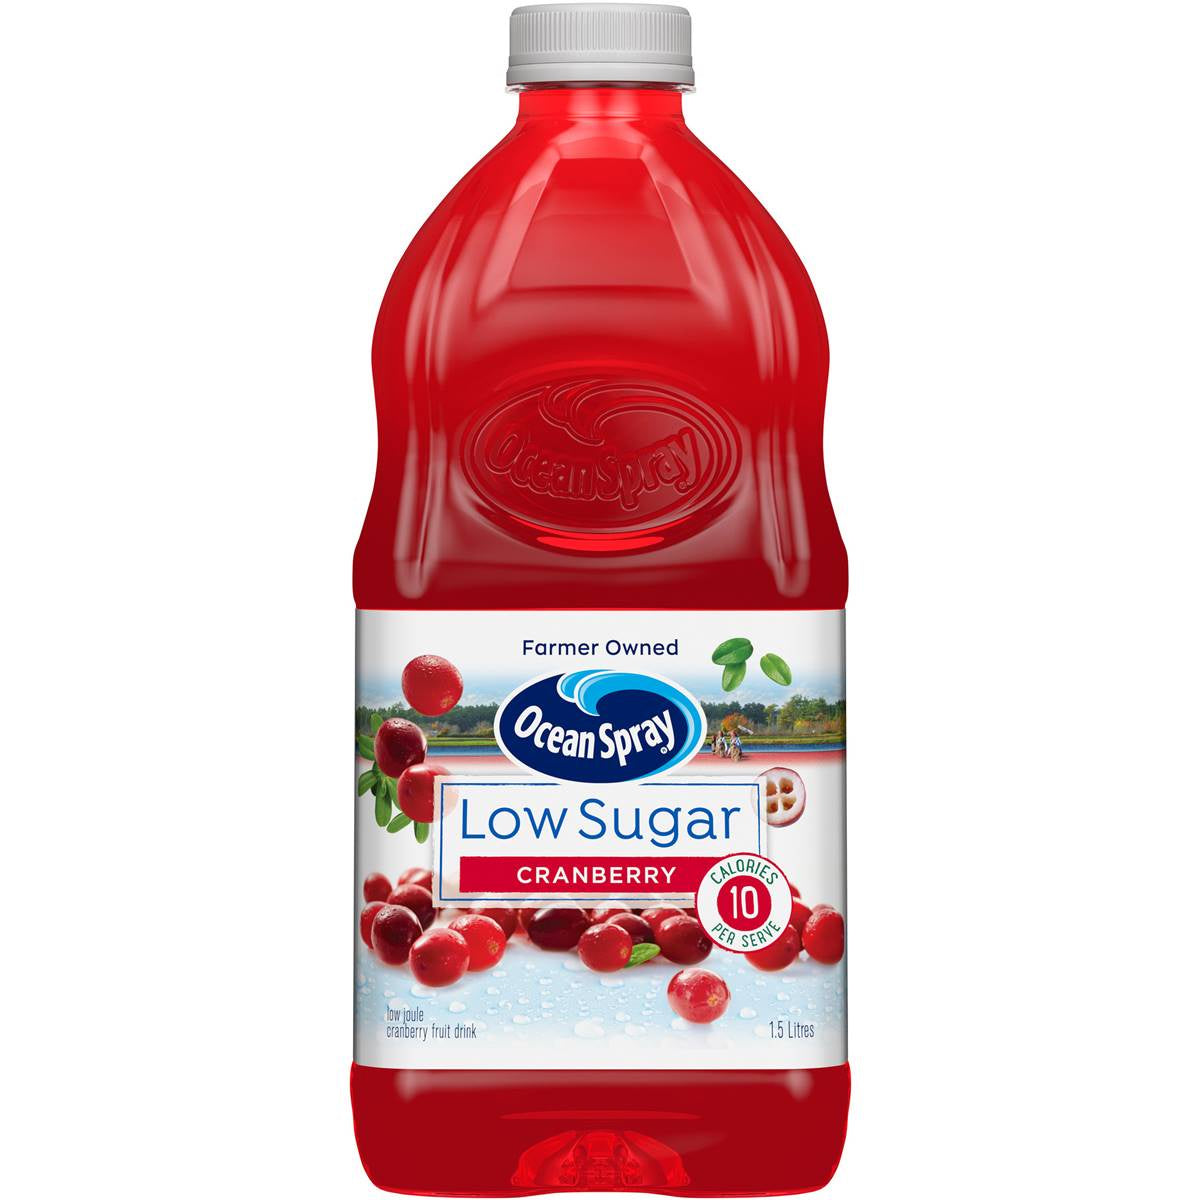 Ocean Spray Low Sugar Cranberry Classic Juice Drink 1.5L